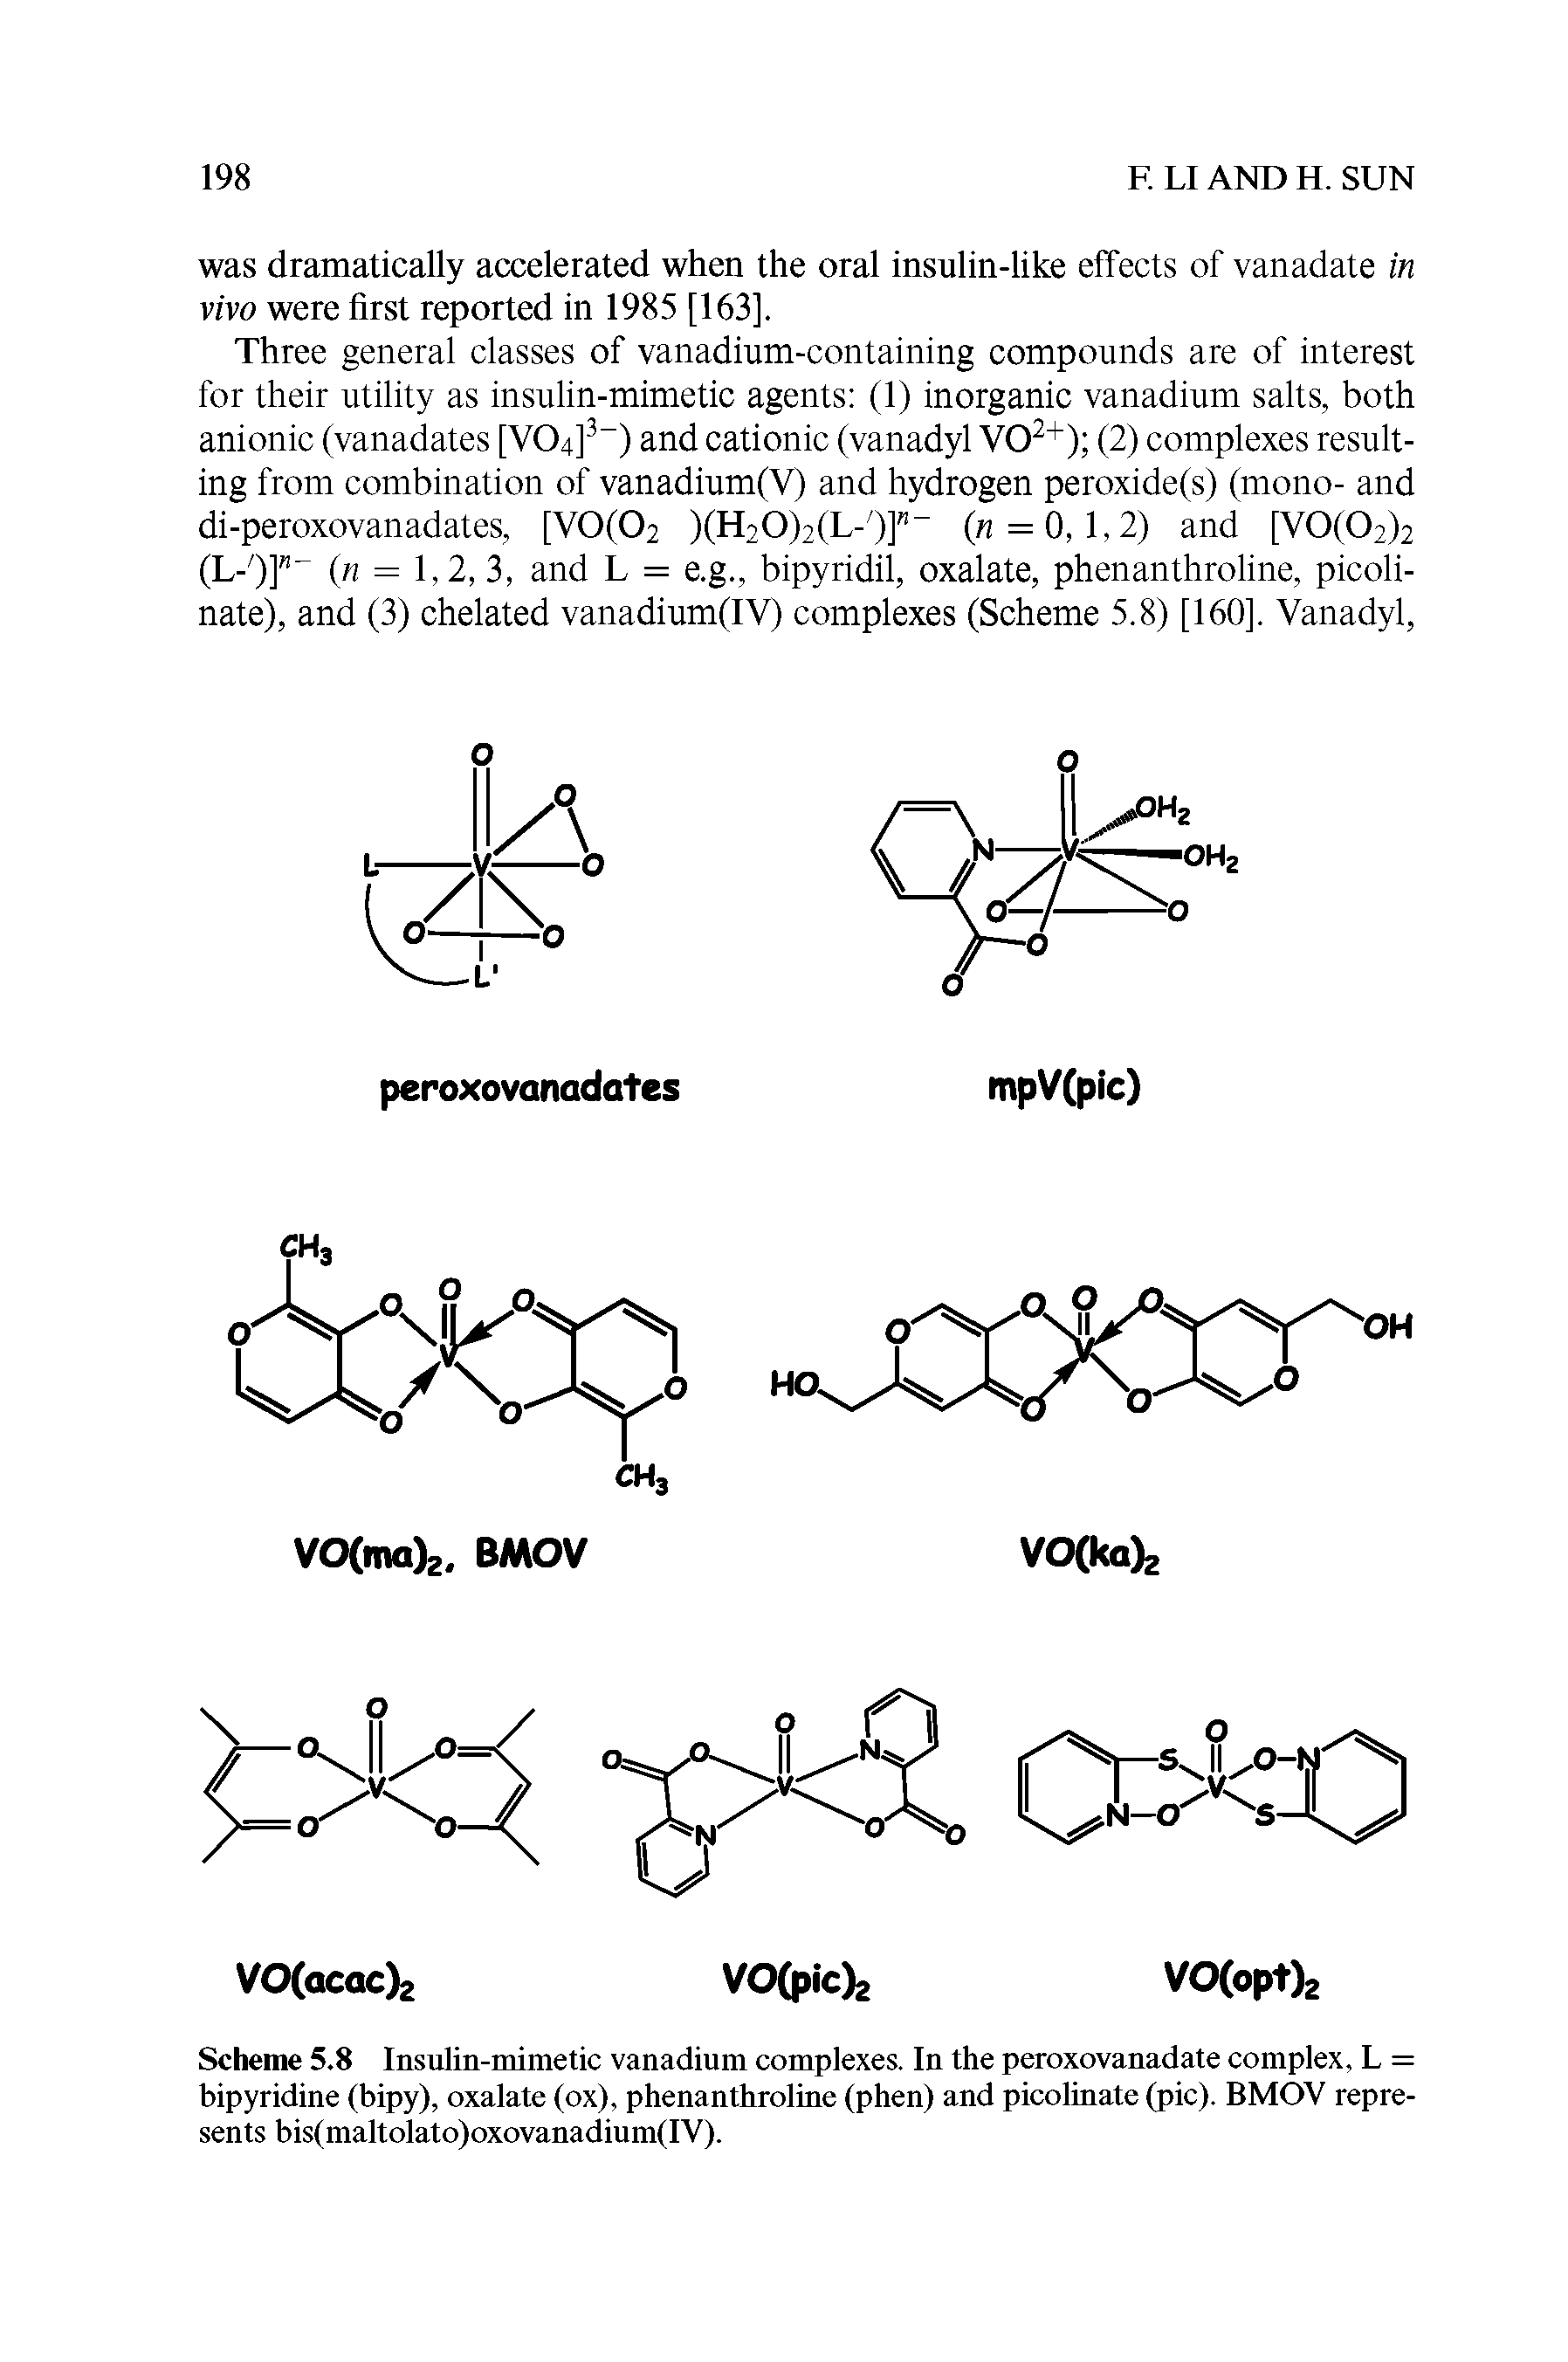 Scheme 5.8 Insulin-mimetic vanadium complexes. In the peroxovanadate complex, L = bipyridine (bipy), oxalate (ox), phenanthroline (phen) and picolinate (pic). BMOV represents bis(maltolato)oxovanadium(IV).